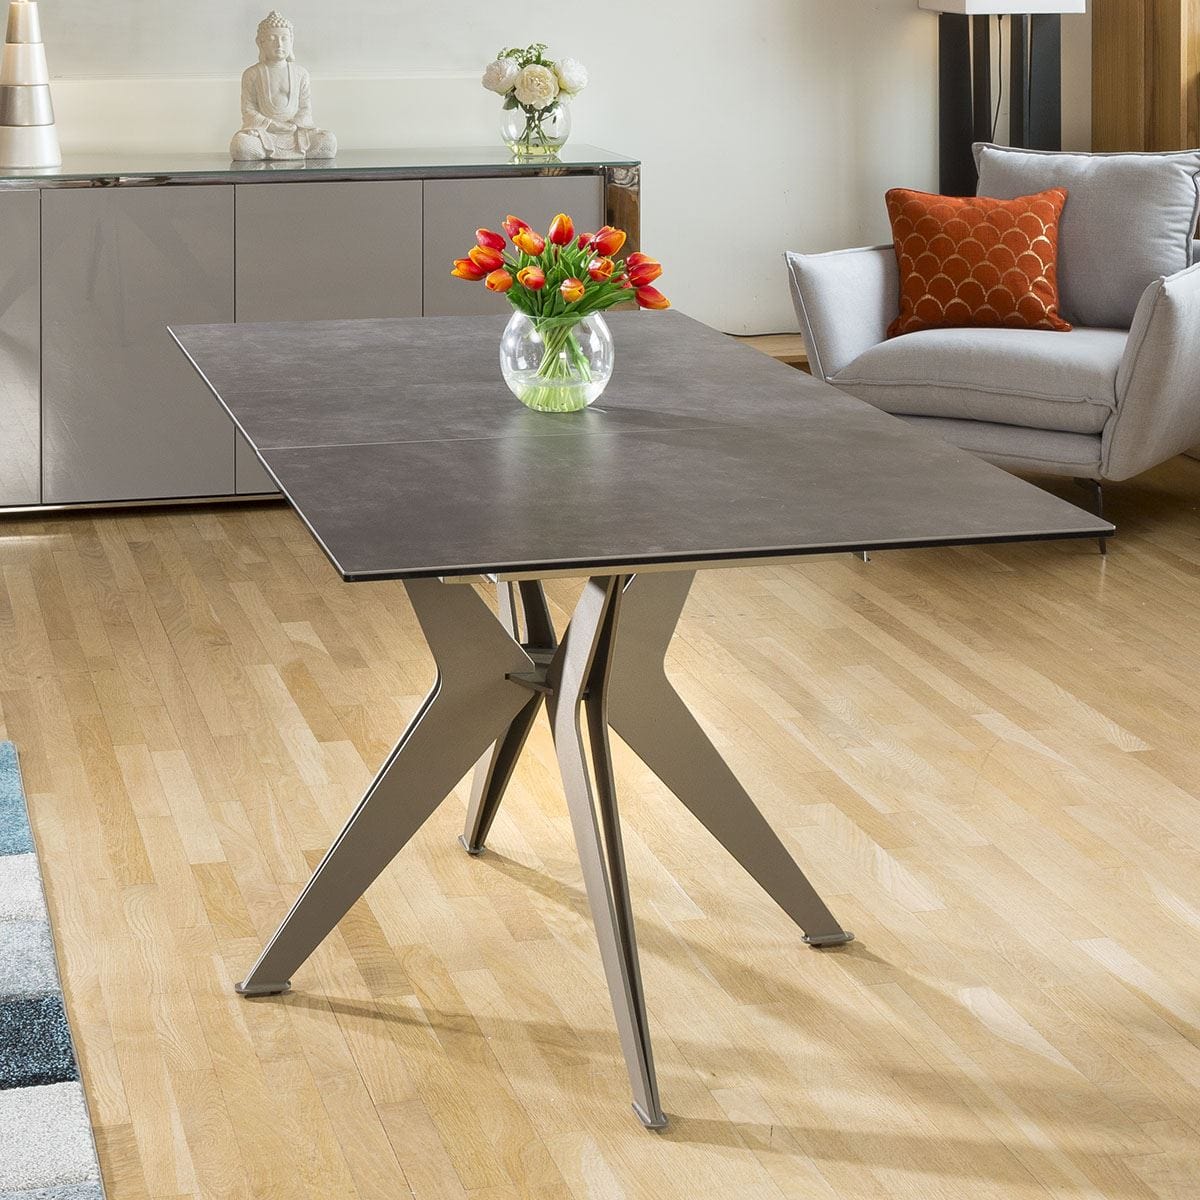 Quatropi Extending Dining Table Charcaol Grey Ceramic + 4 x Grey Carver Chairs